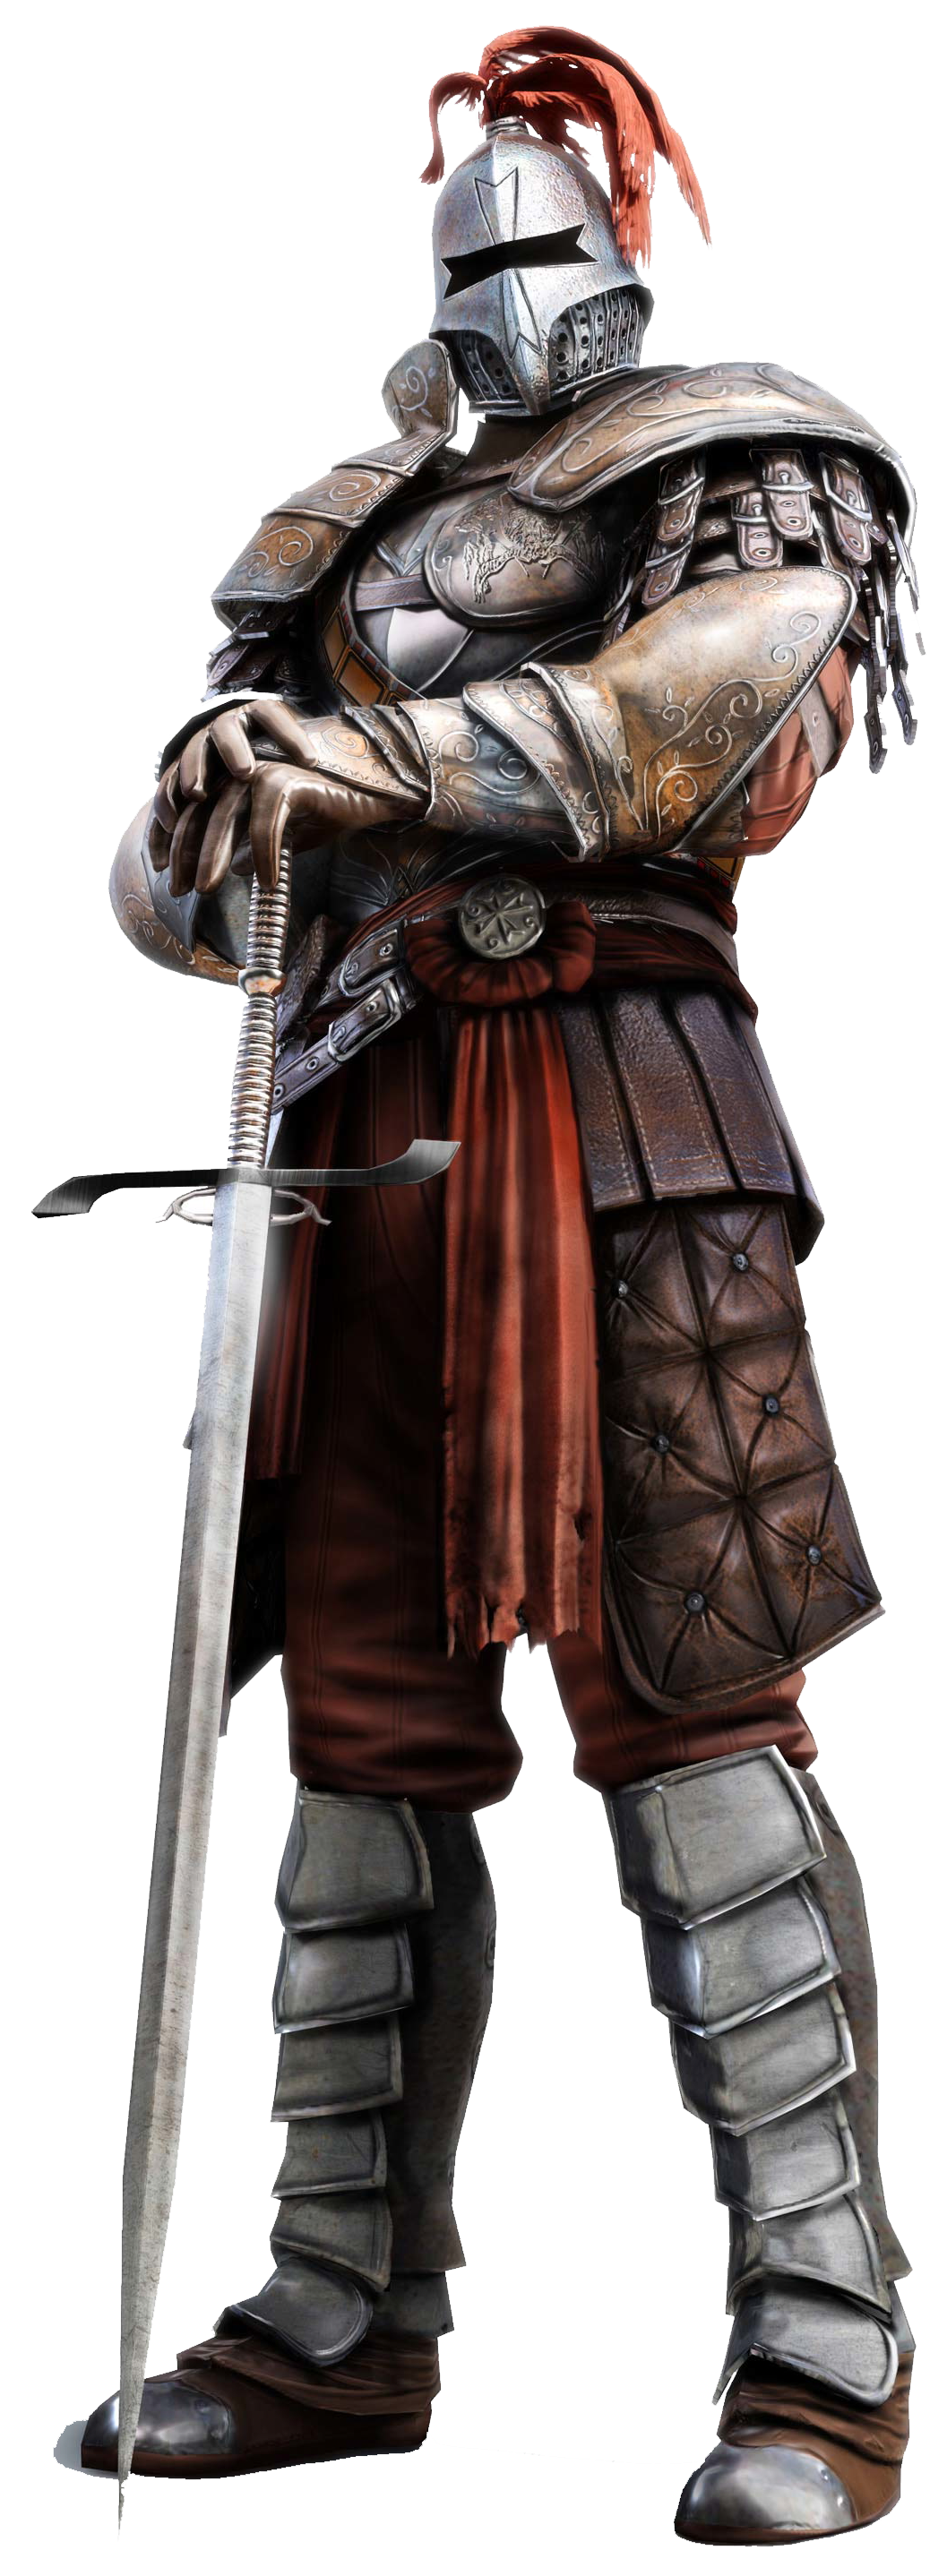 Desmond Miles, Assassin's Creed Wiki